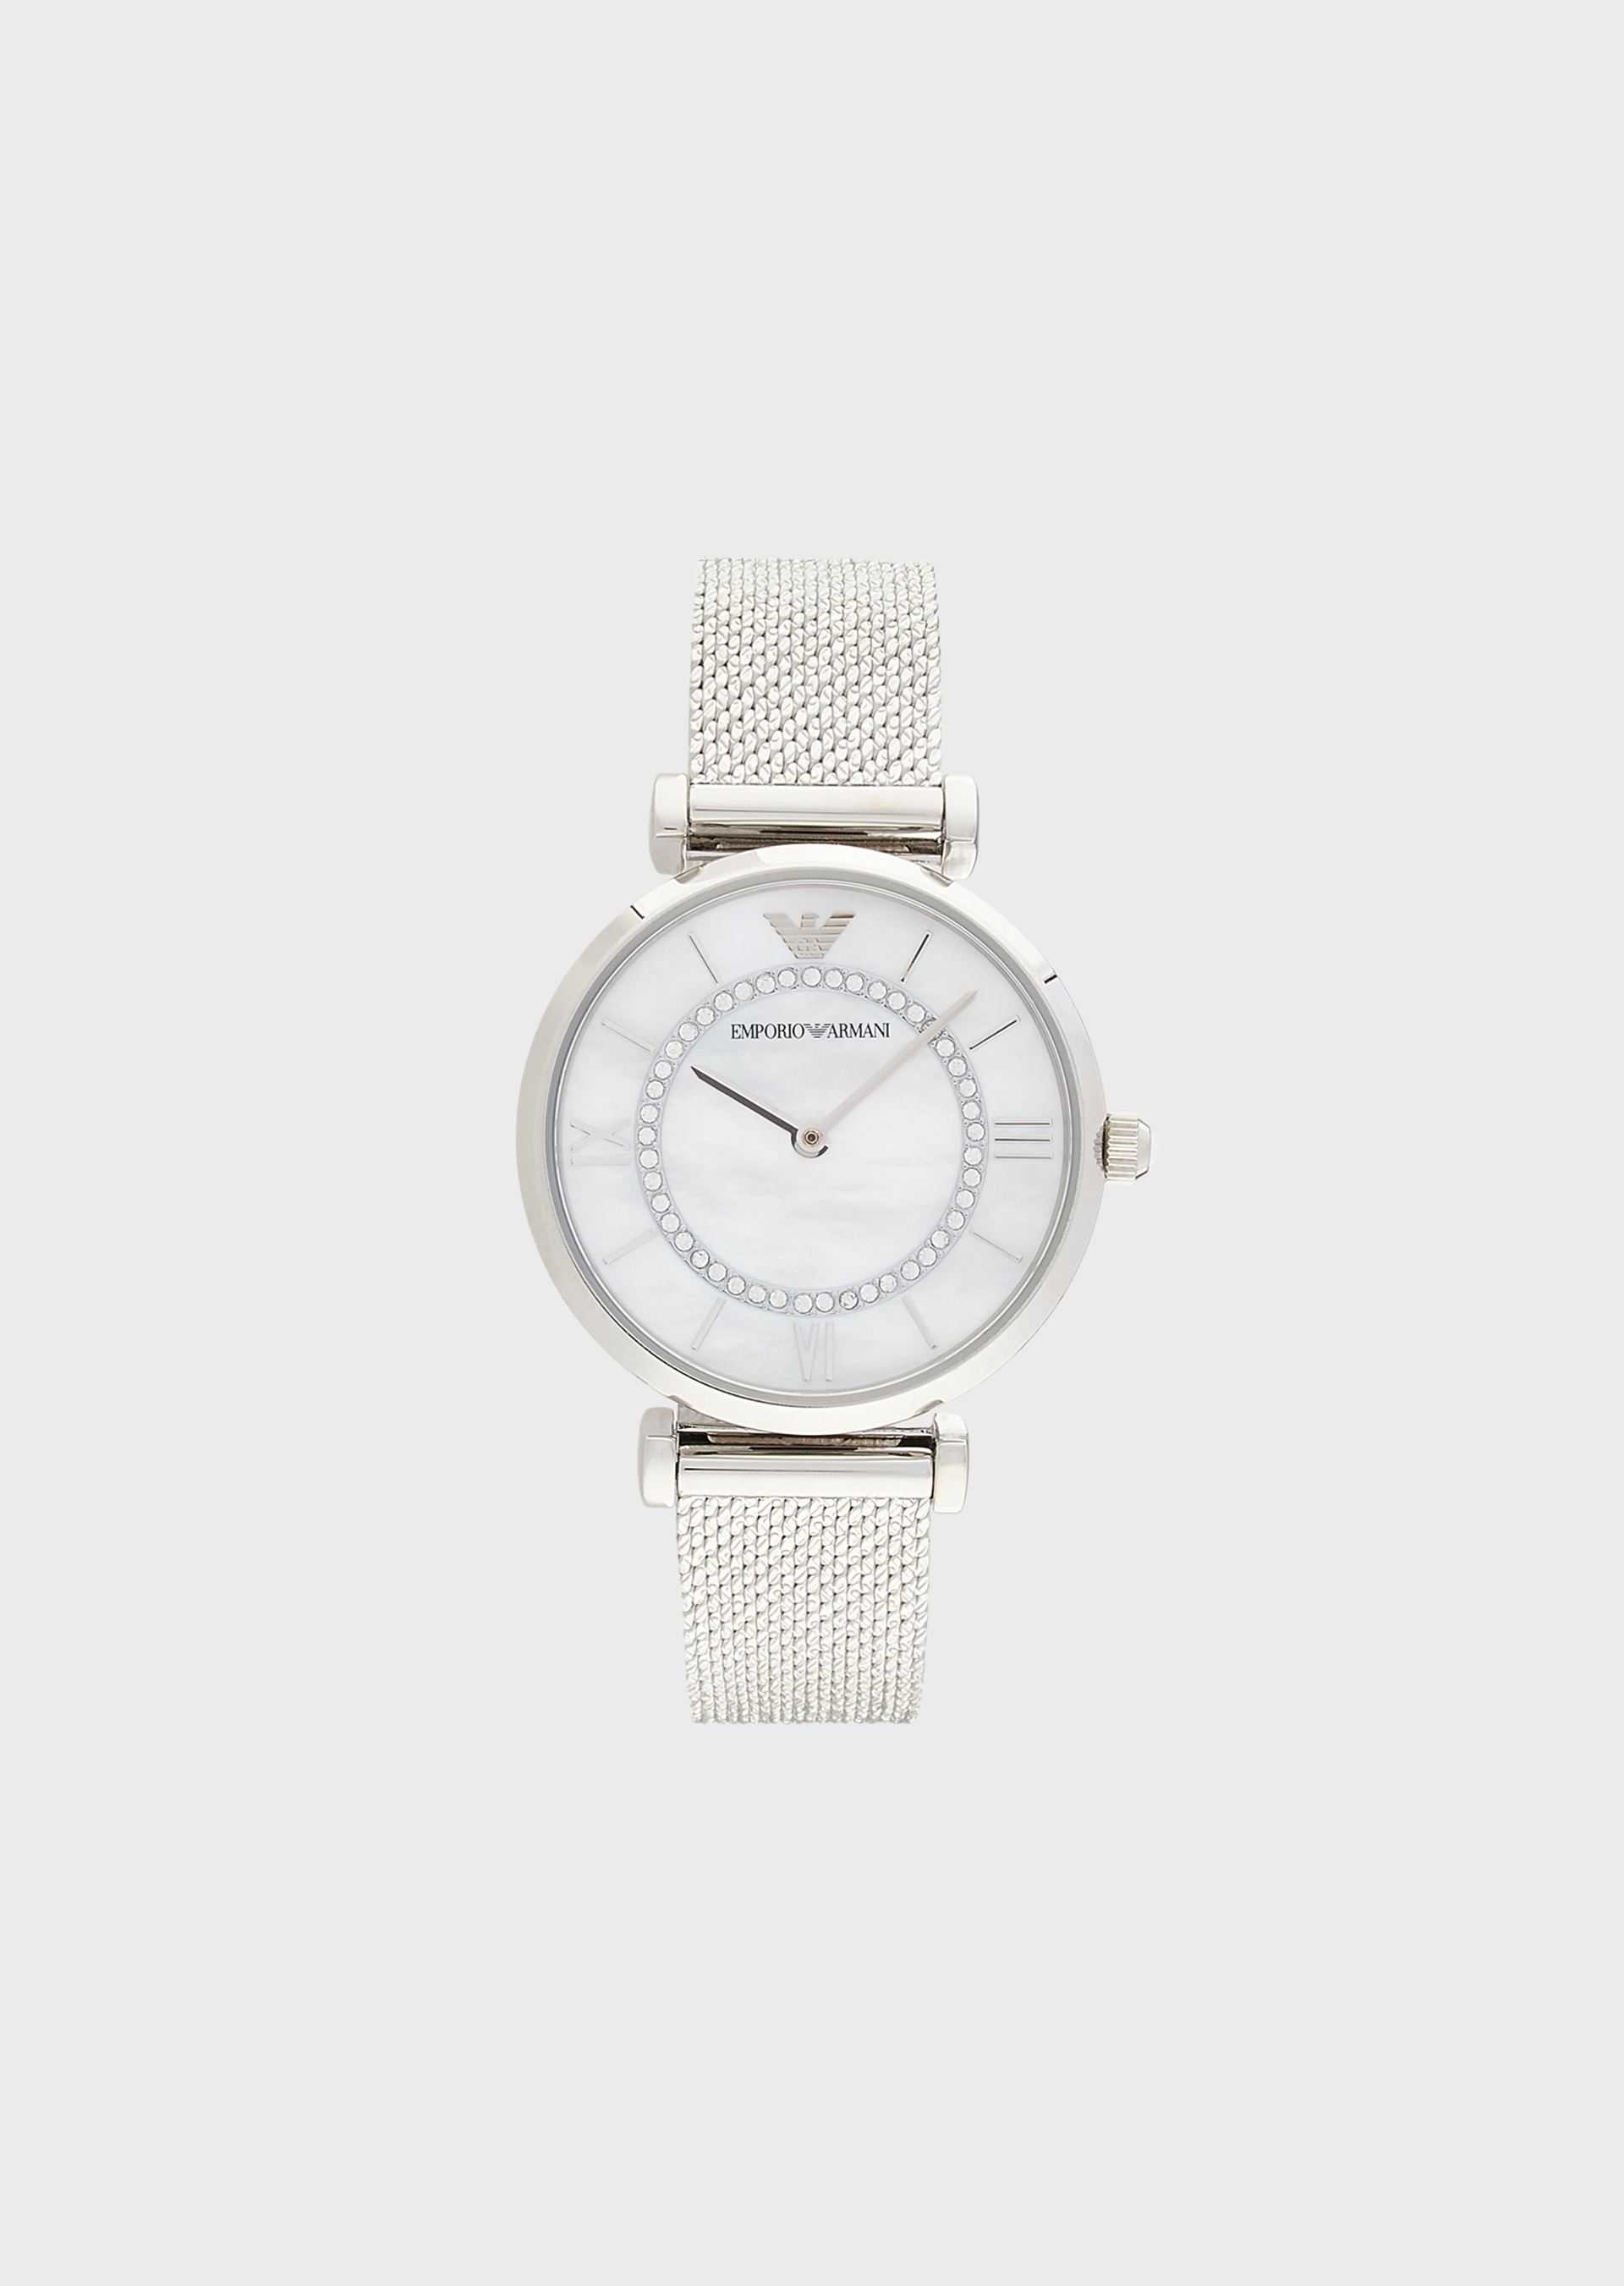 Emporio Armani Steel Strap Watches - Item 50246826 In Silver